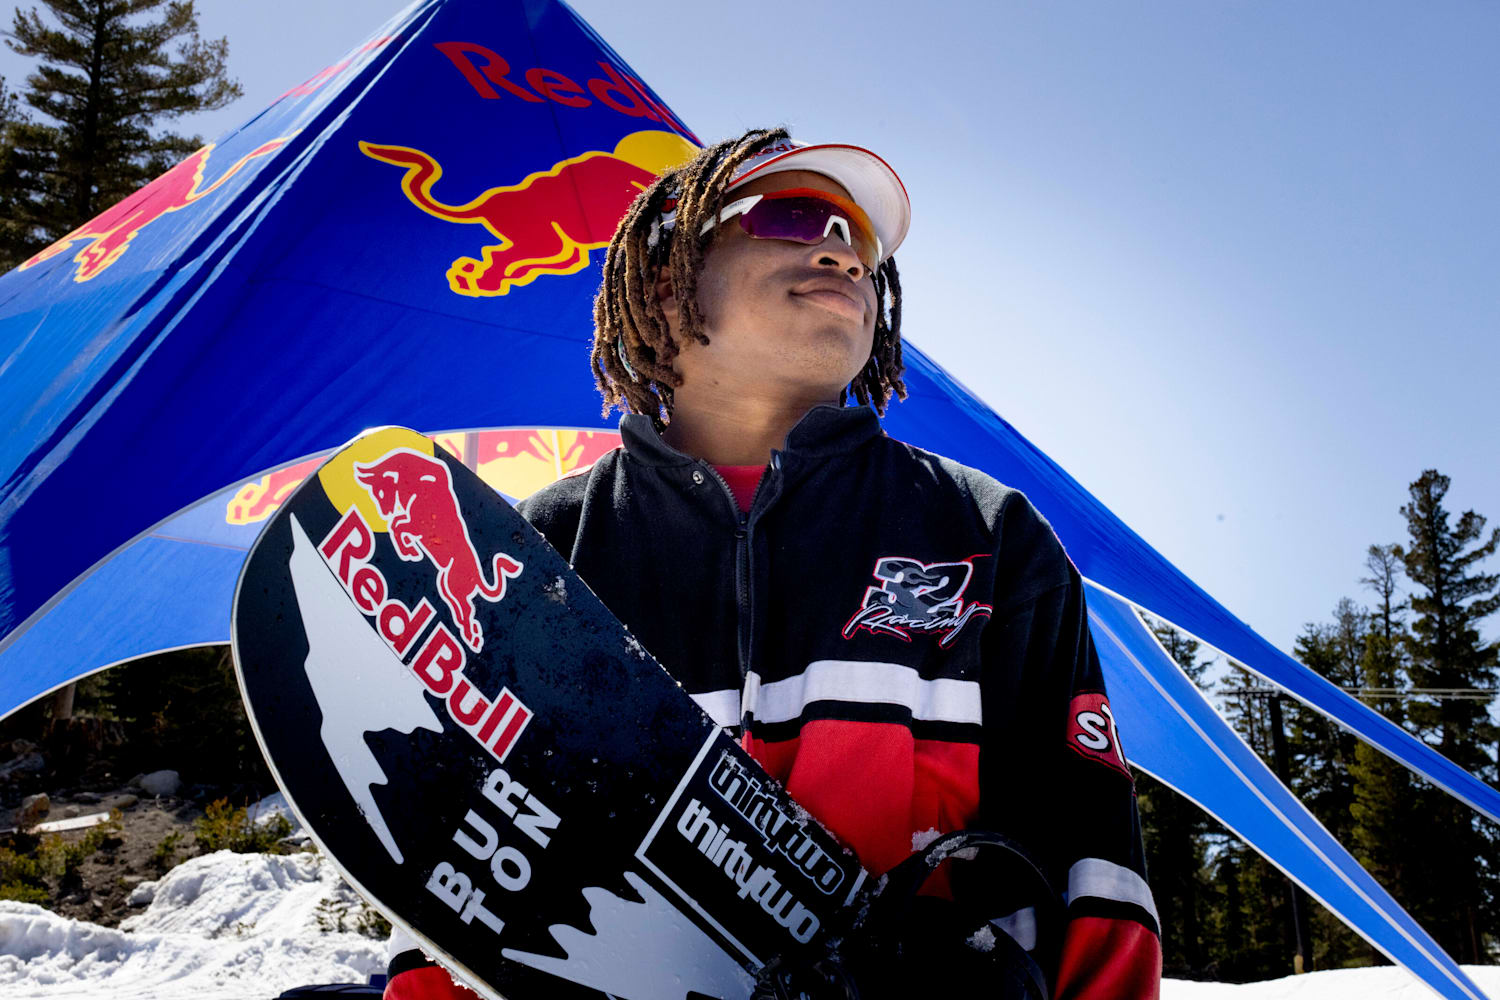 Zeb Snowboarding – Red Bull Athlete